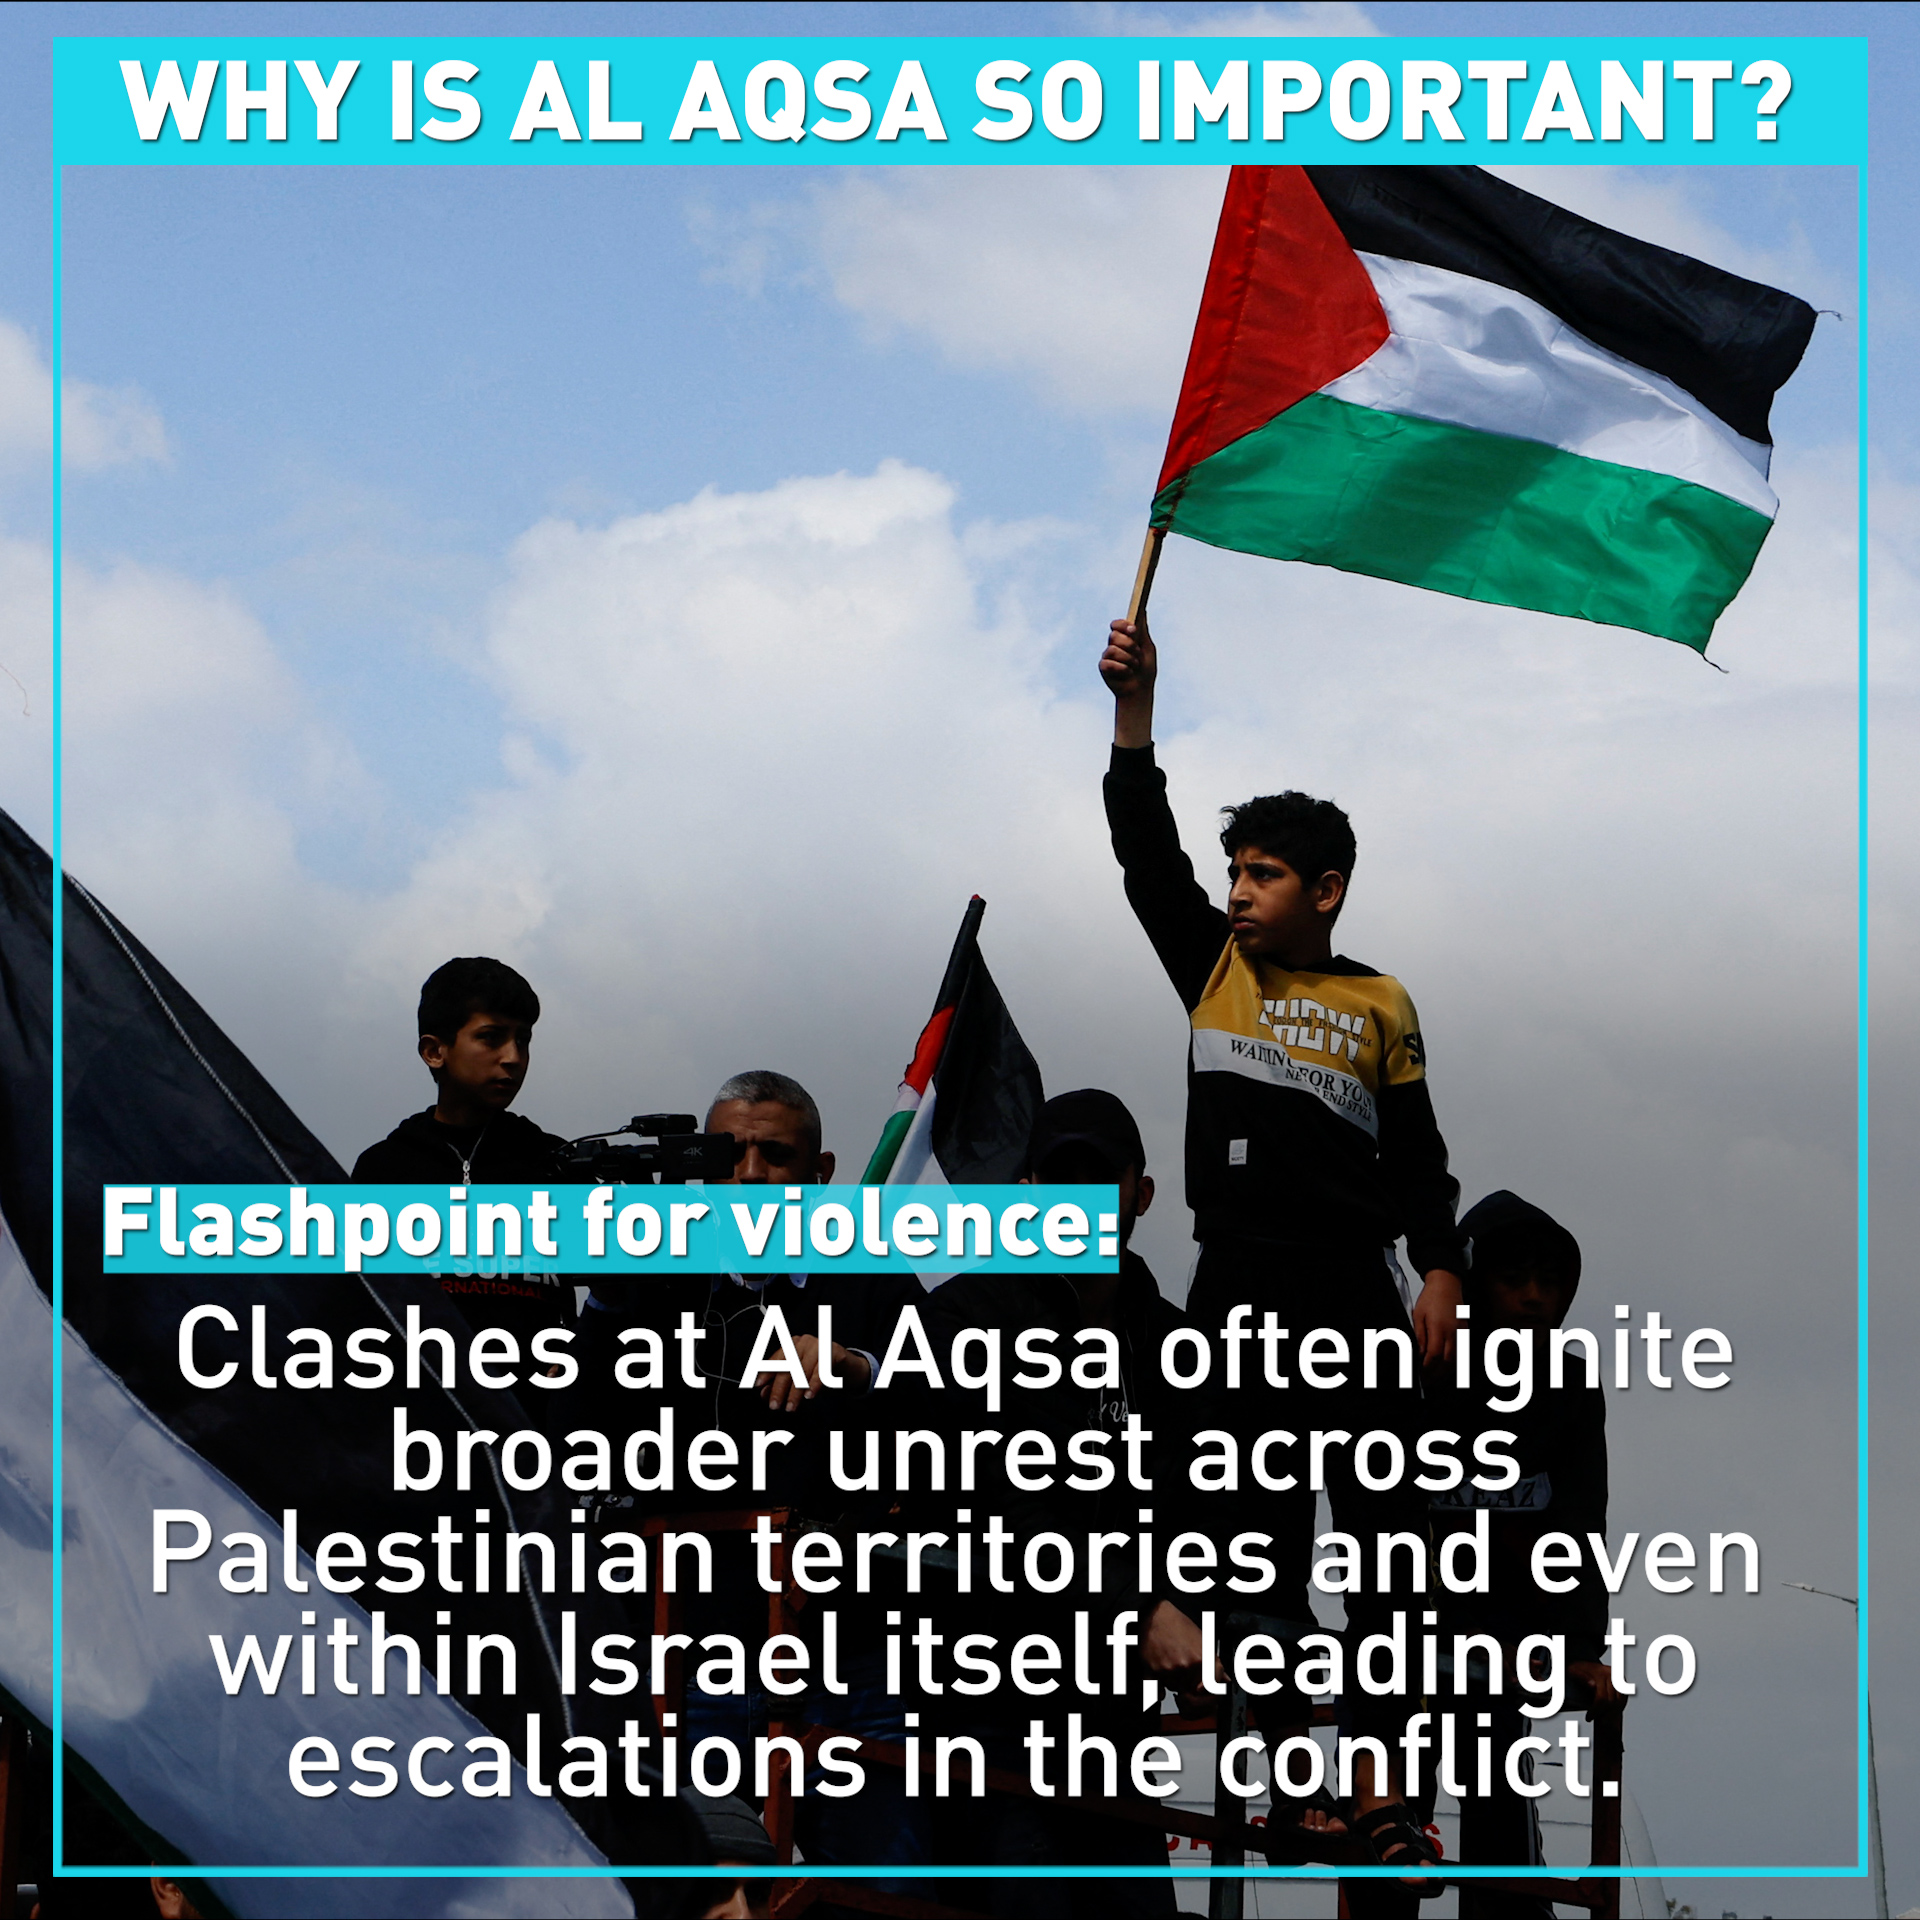 Why is Al Aqsa so important?